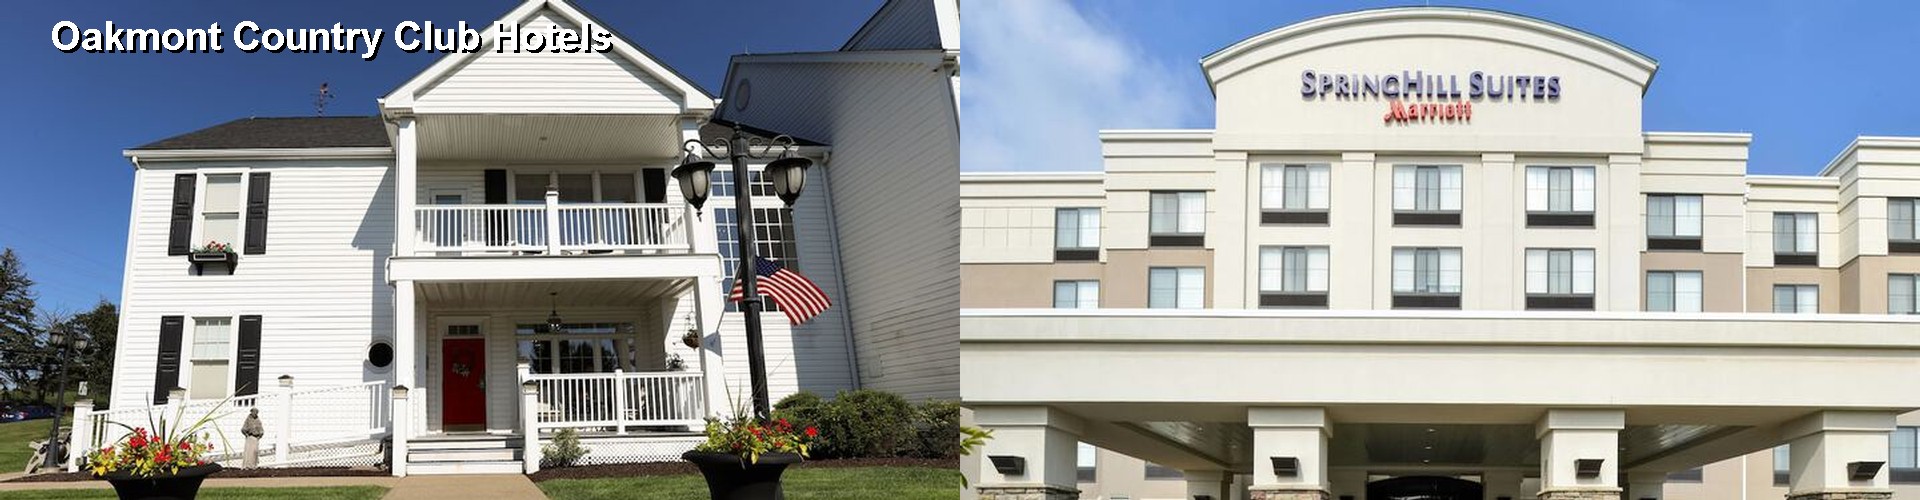 5 Best Hotels near Oakmont Country Club